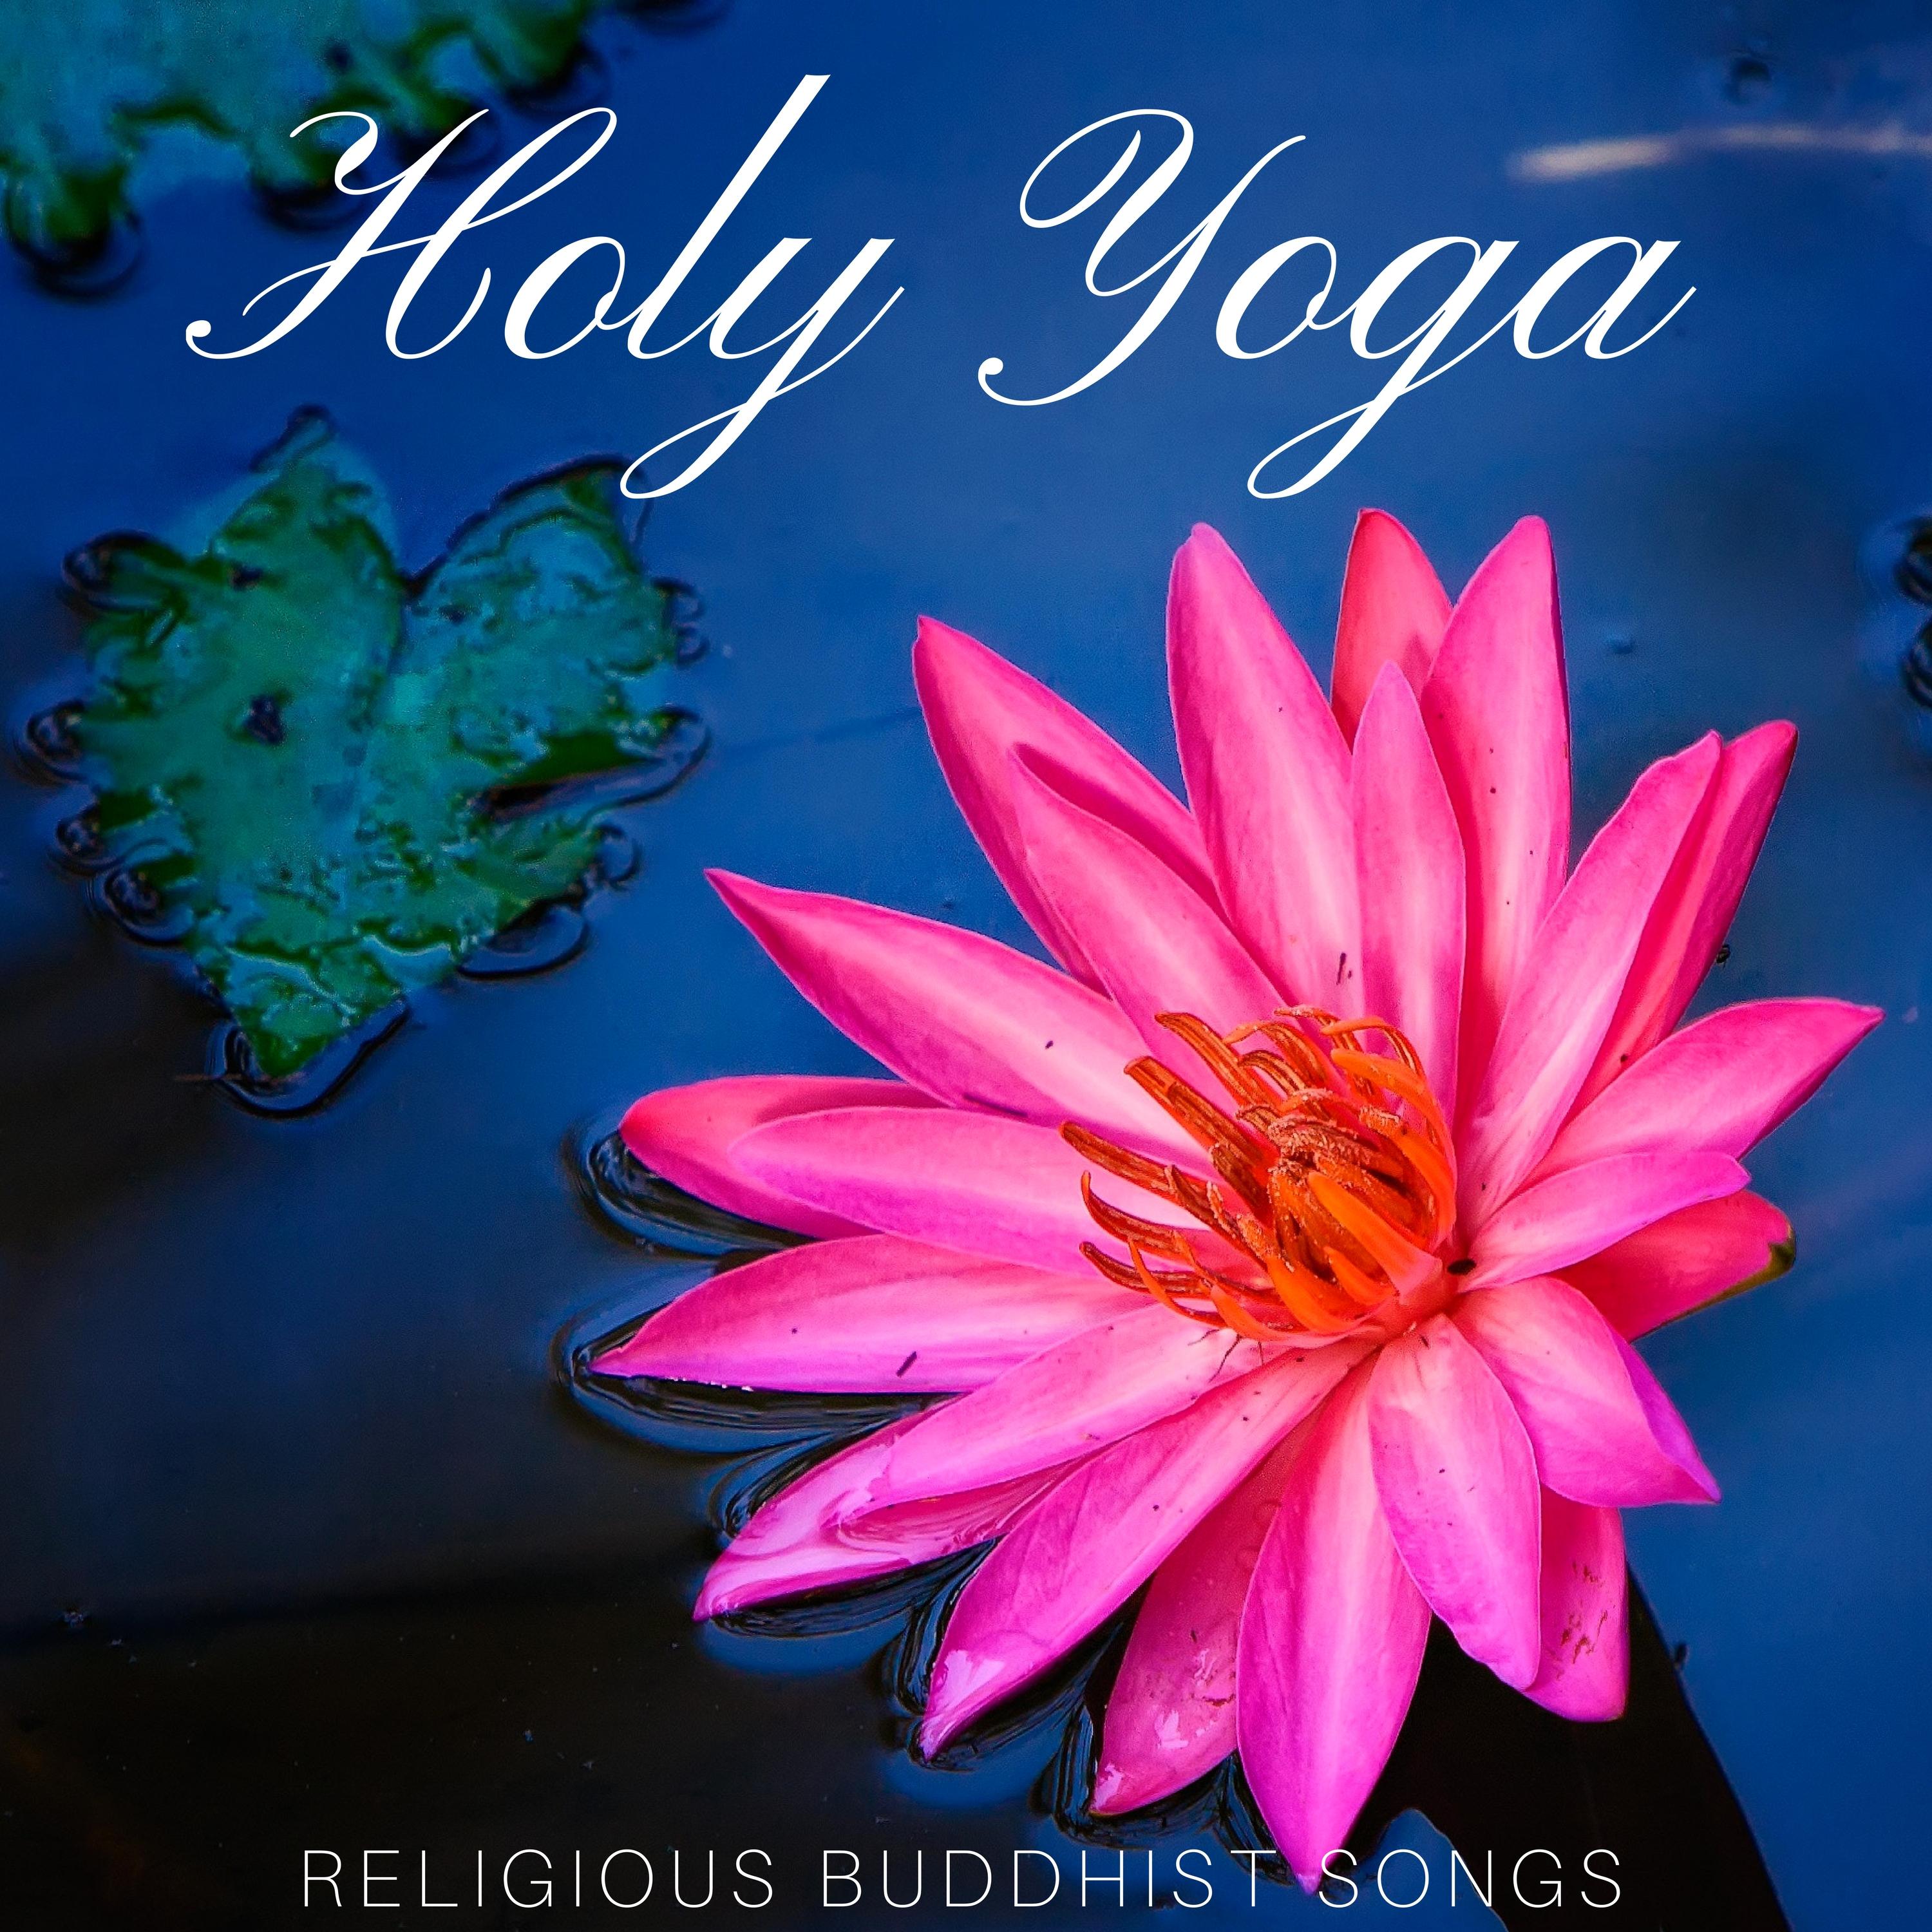 Holy Yoga - Religious Buddhist Songs for Yoga Meditation